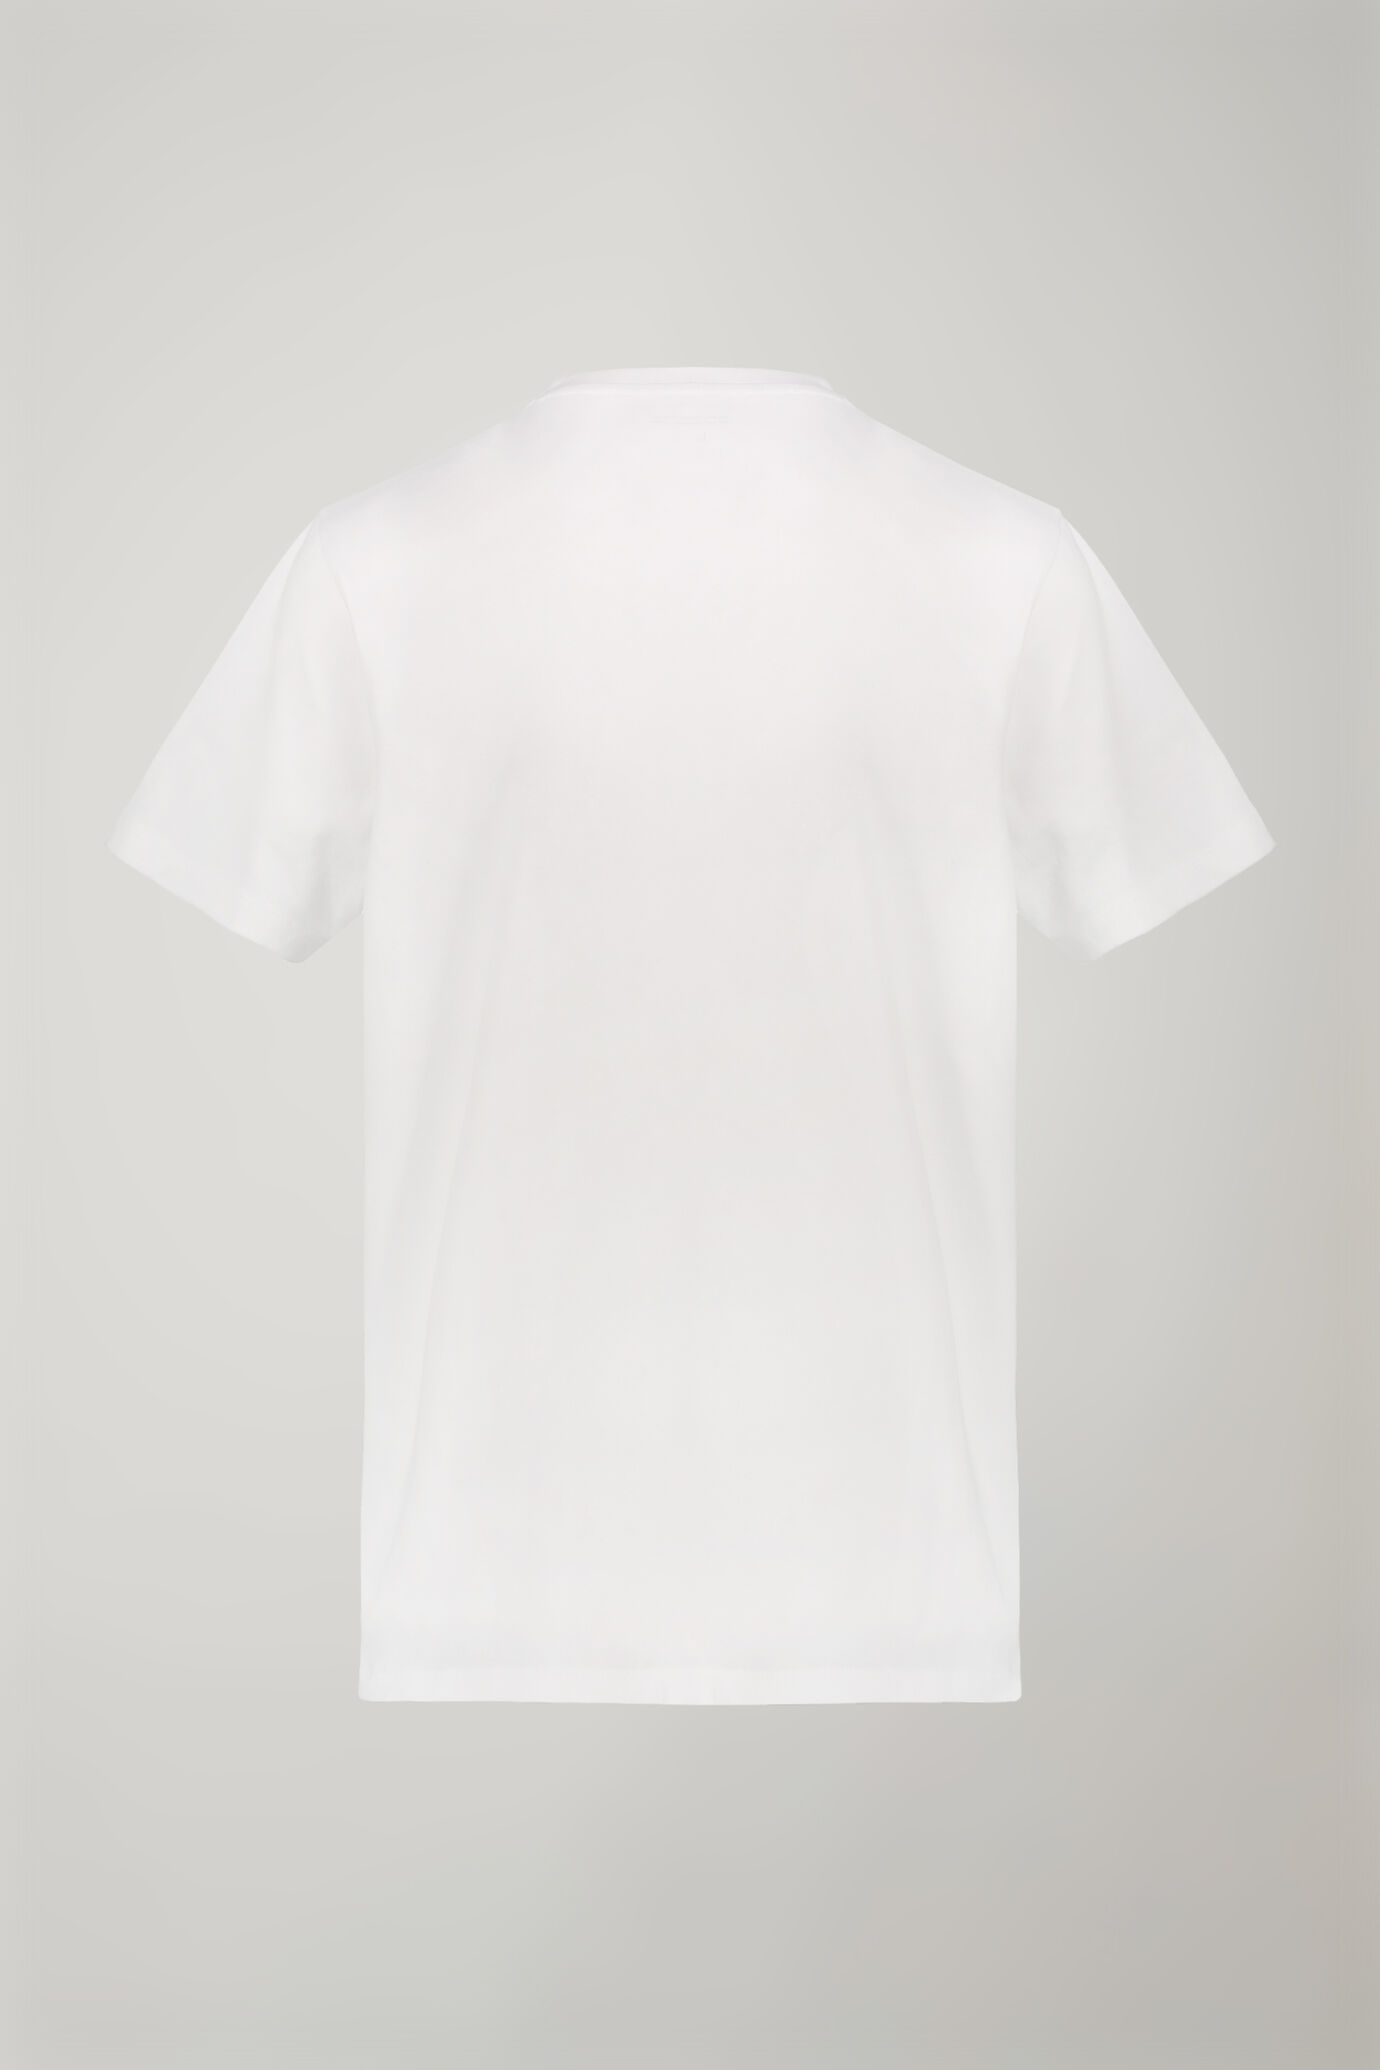 T-shirt uomo girocollo 100% cotone regular fit image number 5